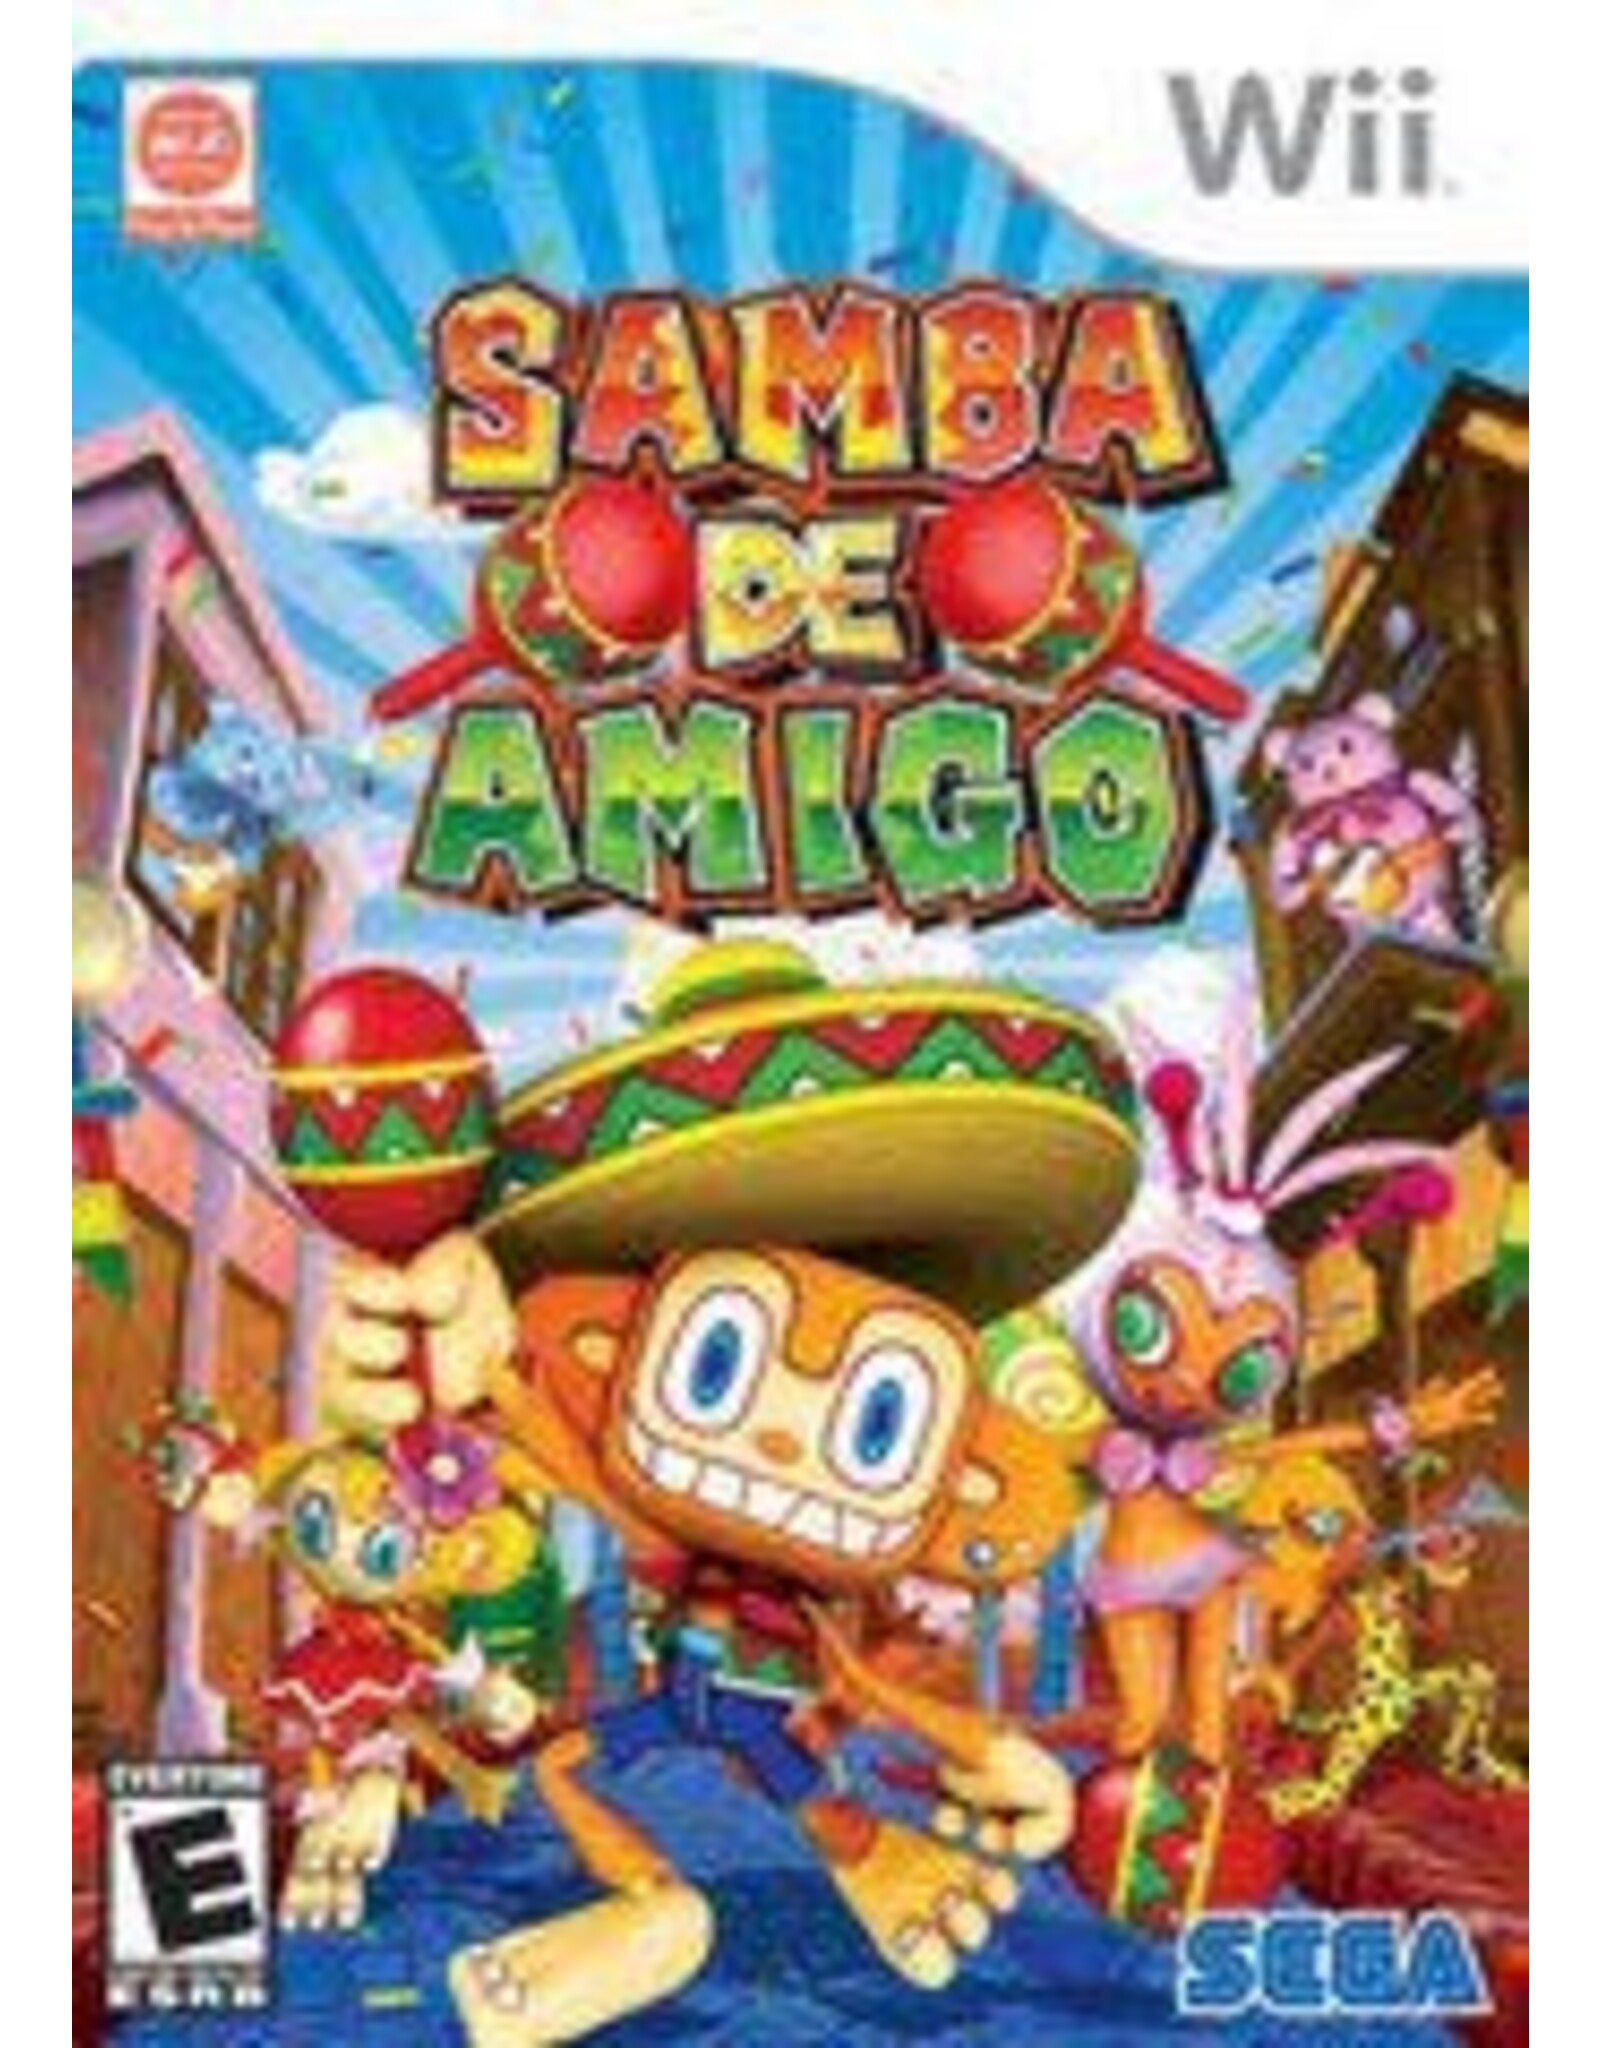 Wii Samba De Amigo (CiB)